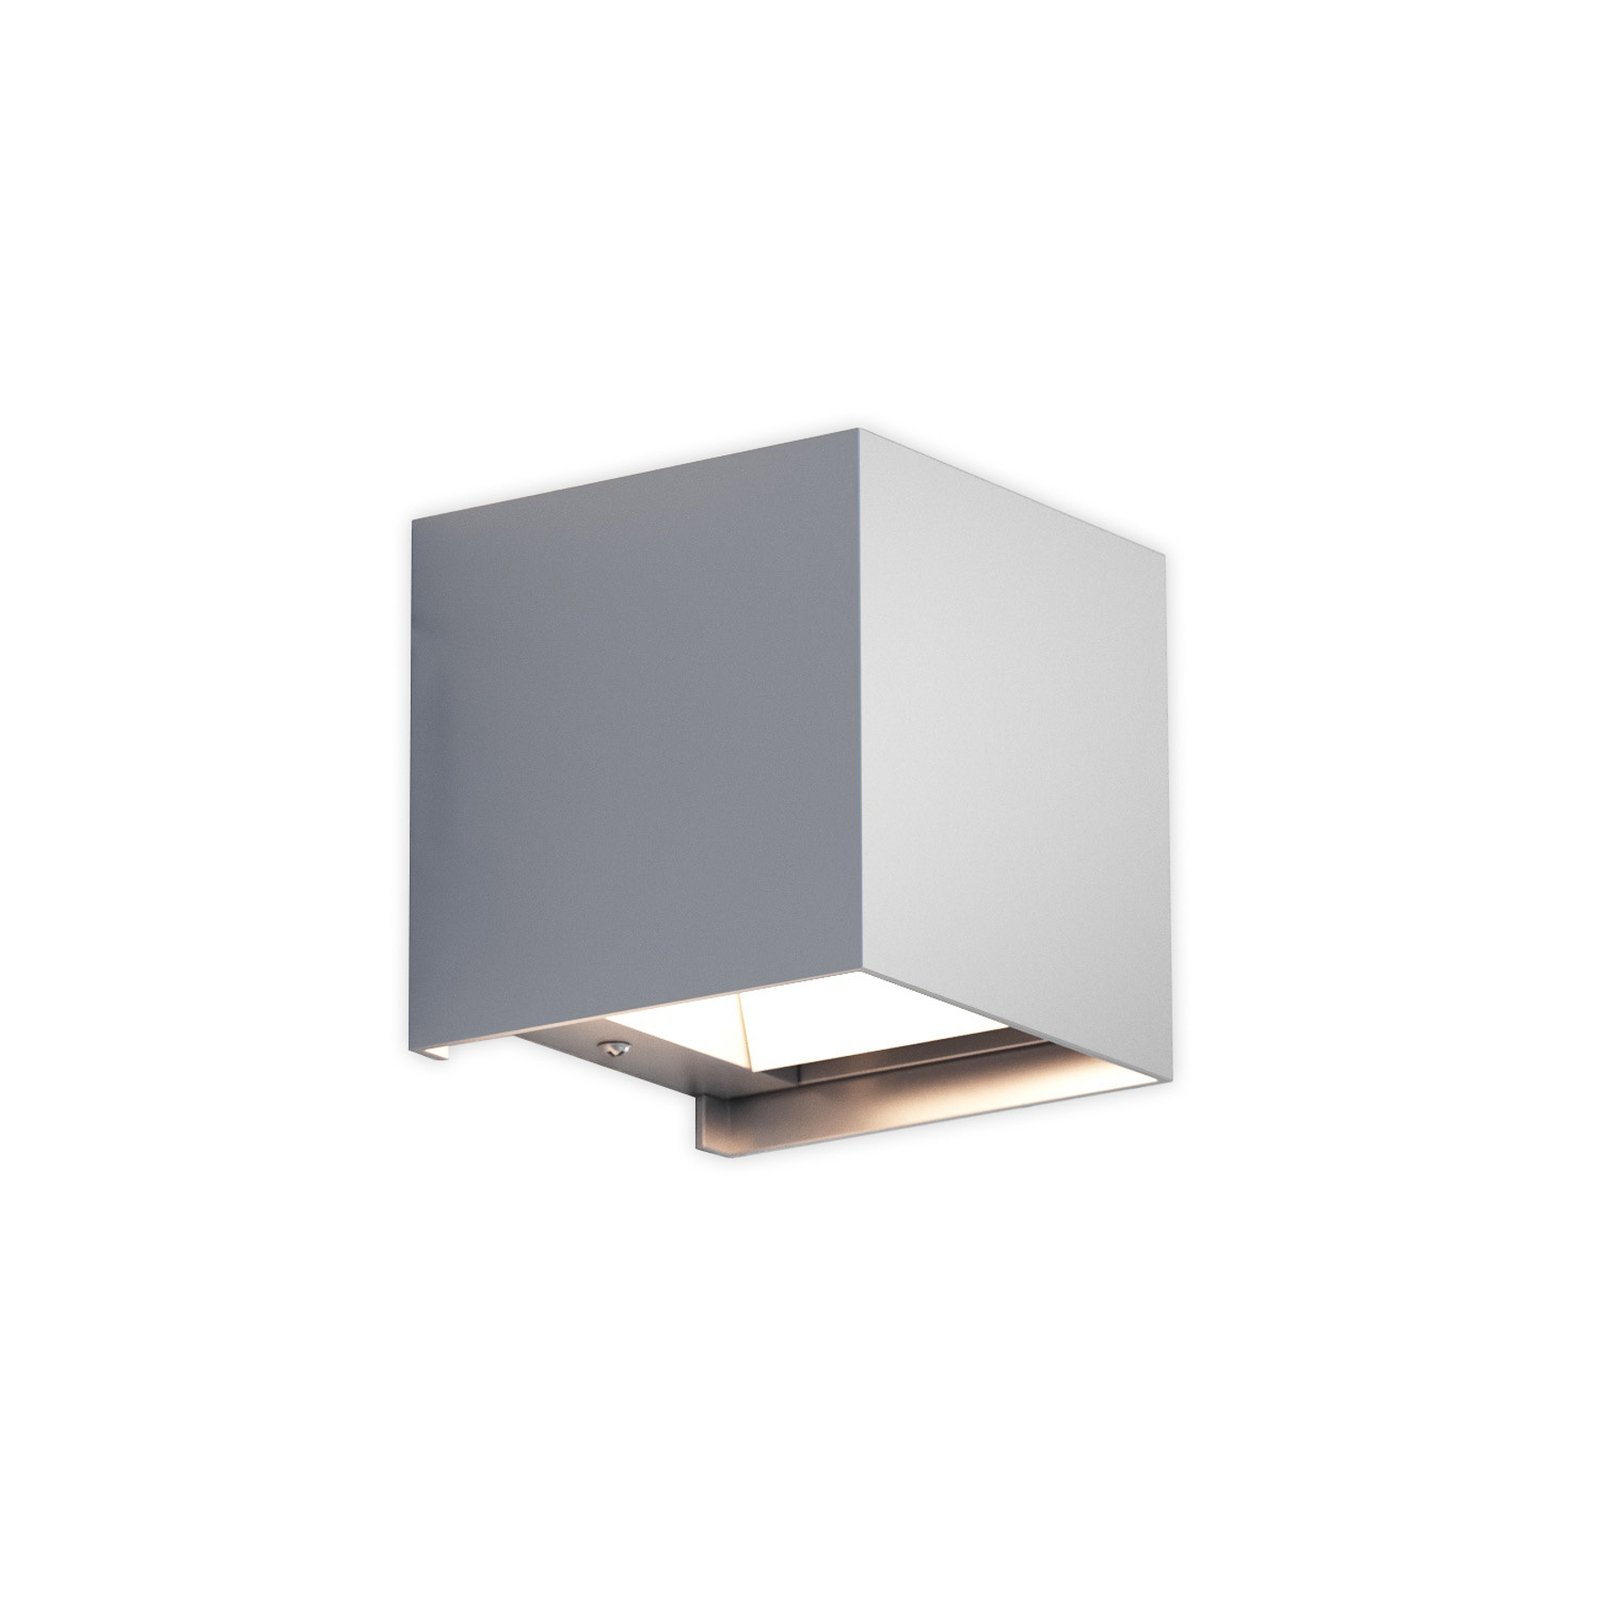 Zidna lampa Zuza 2, boja aluminija, metal, četiri lamela, 10 cm, G9